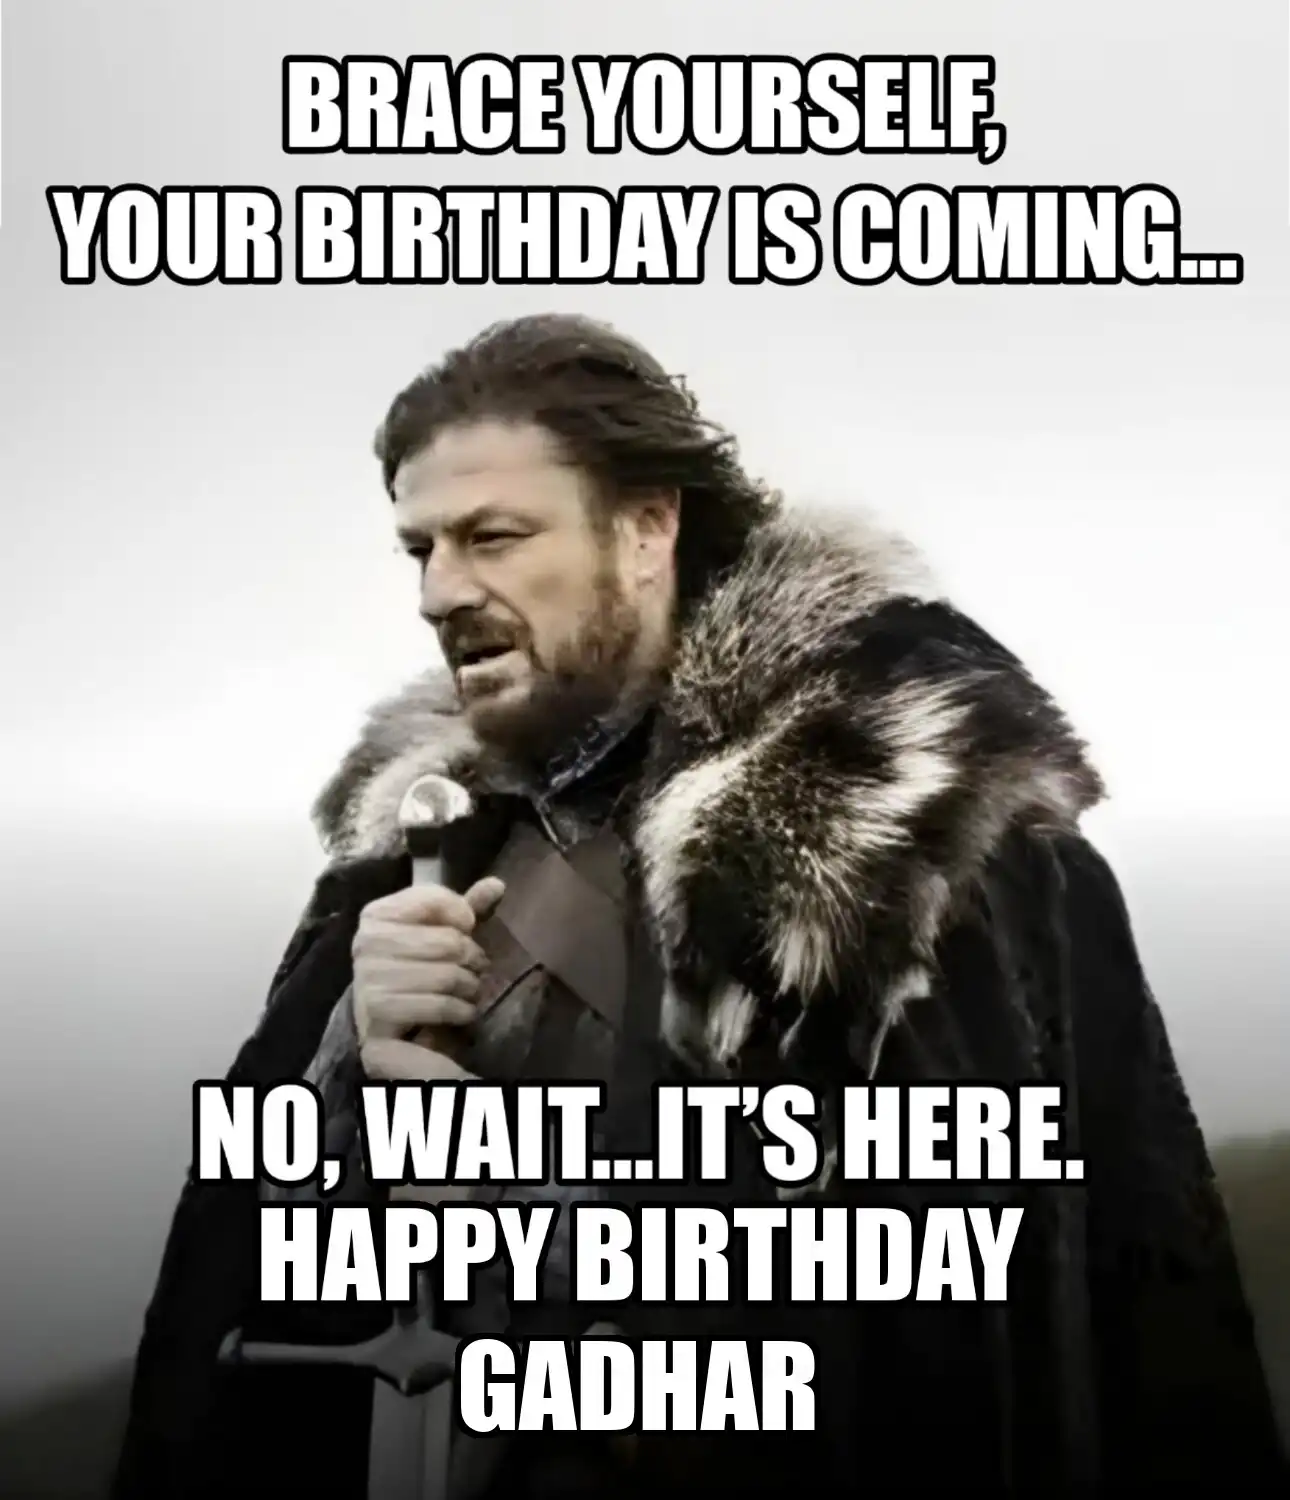 Happy Birthday Gadhar Brace Yourself Your Birthday Is Coming Meme